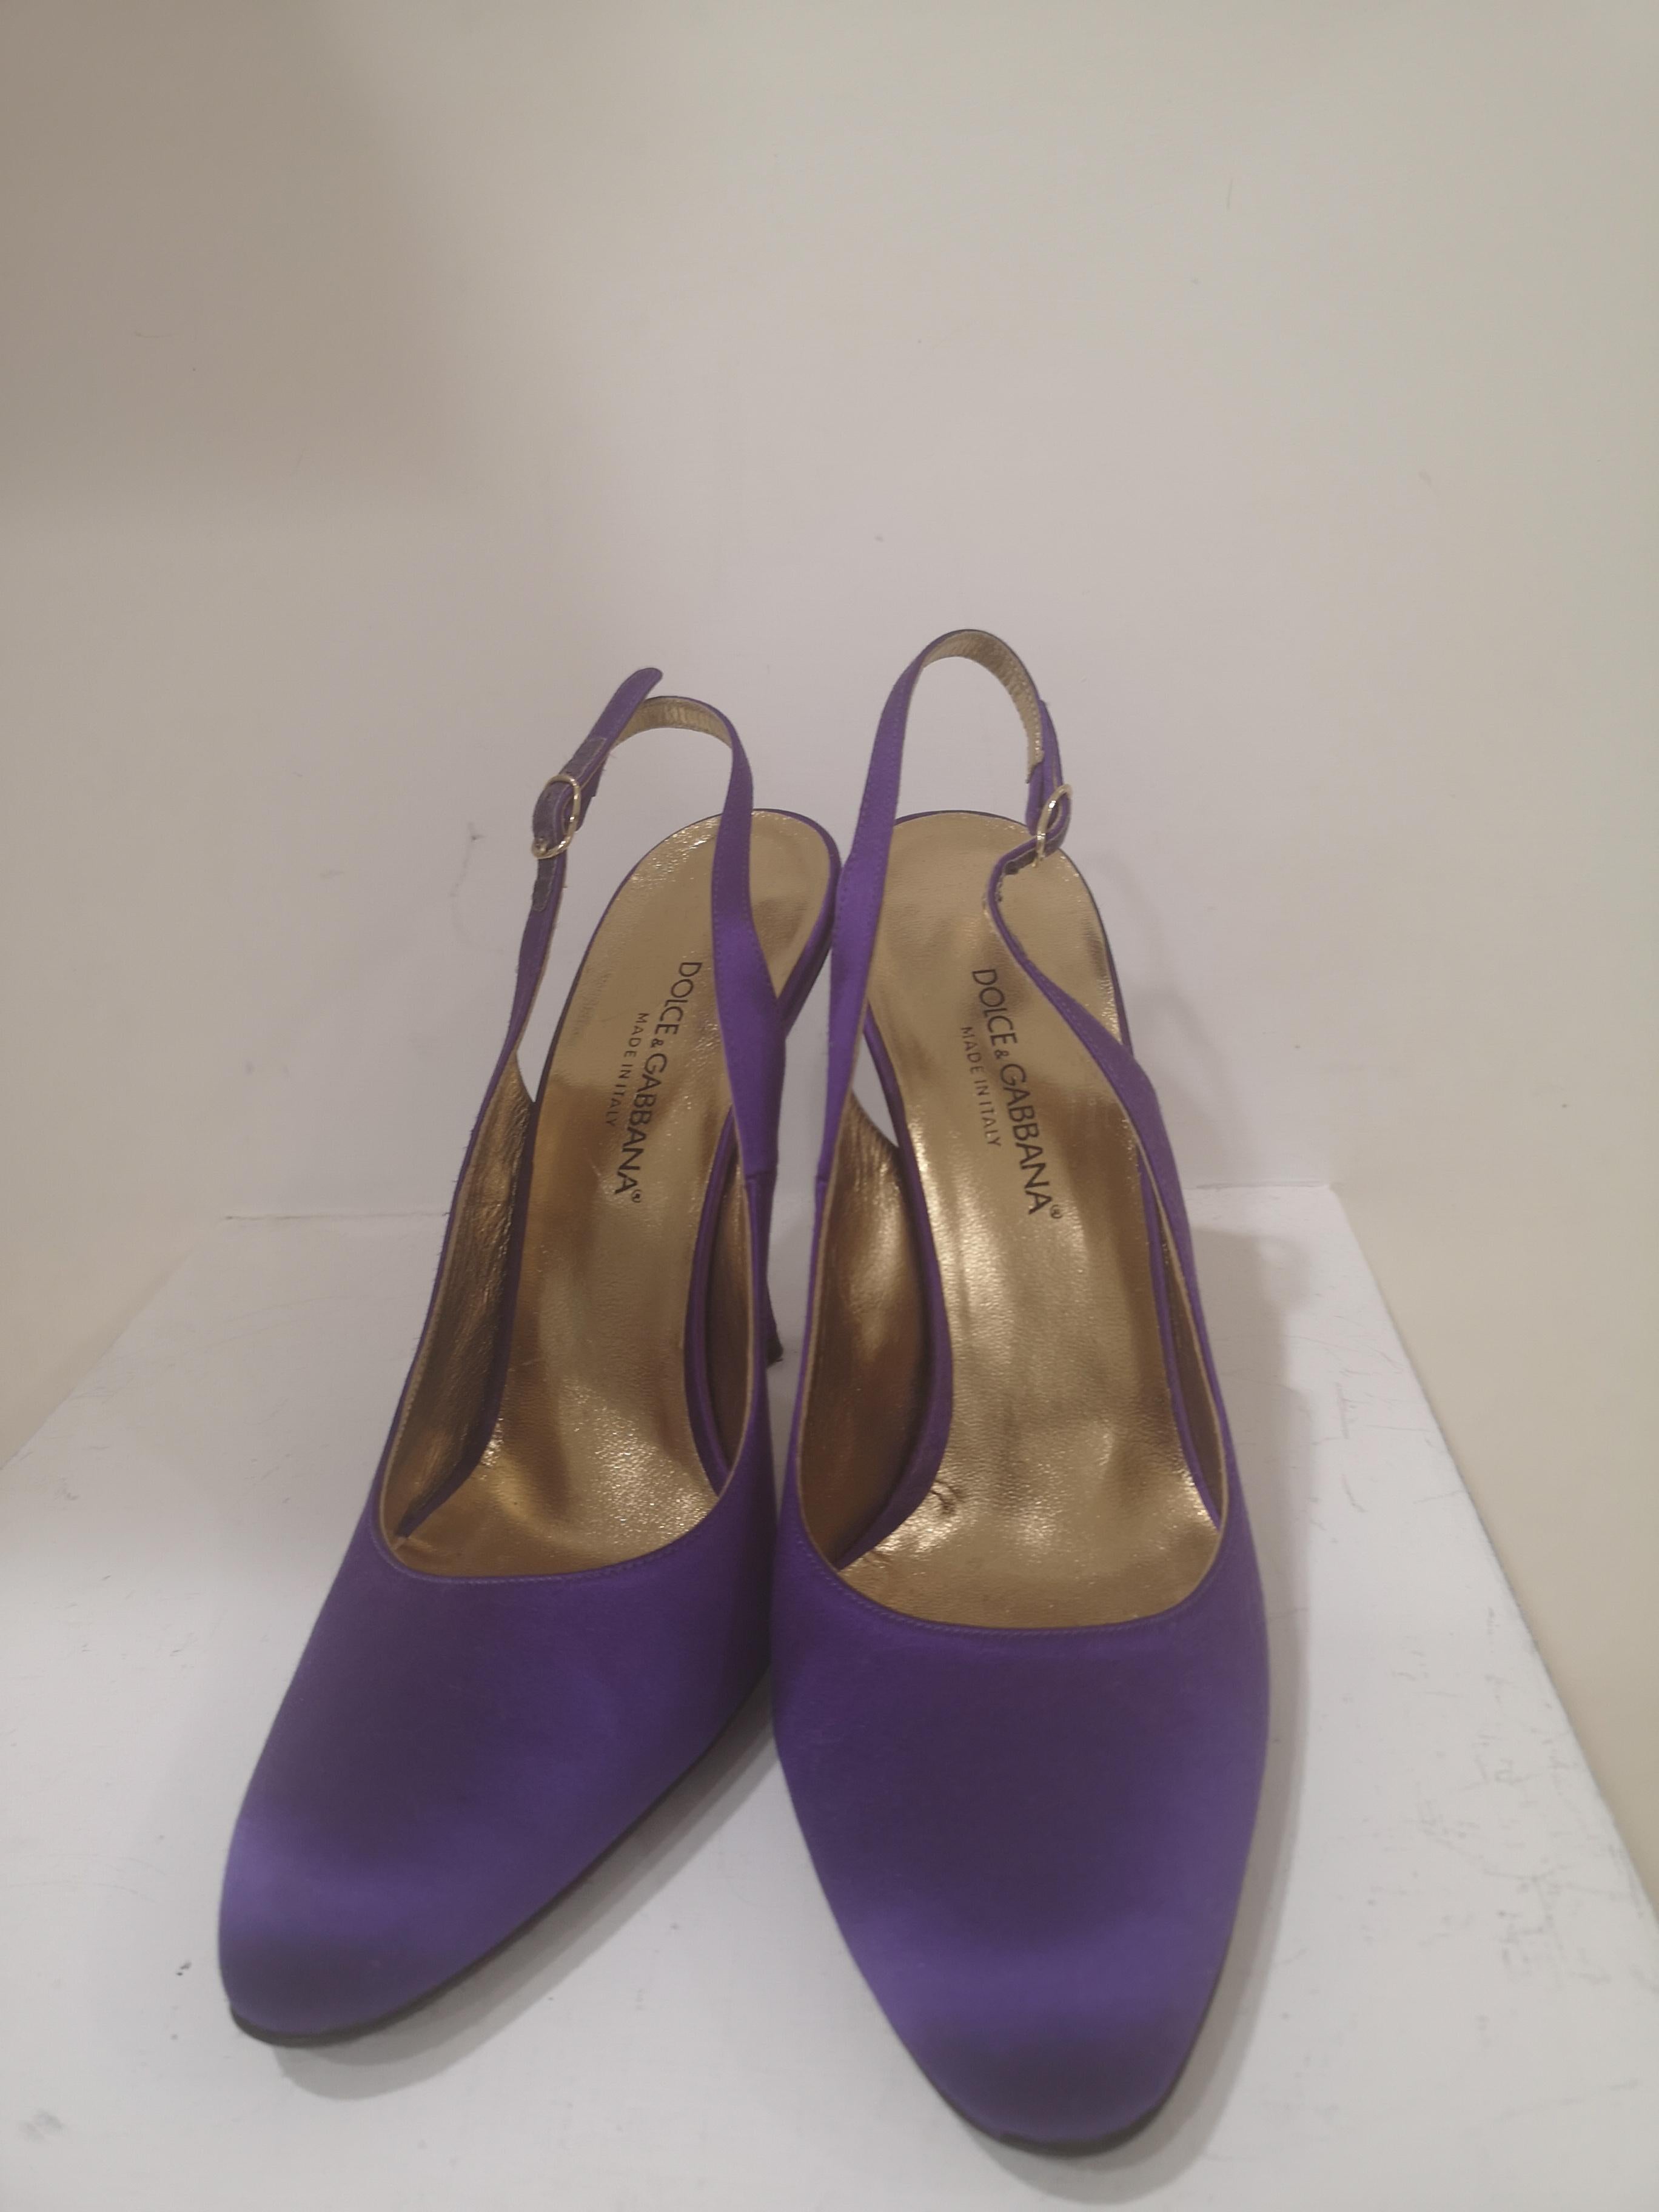 Dolce & Gabbana Silk satin purple Sandals
size 38 it